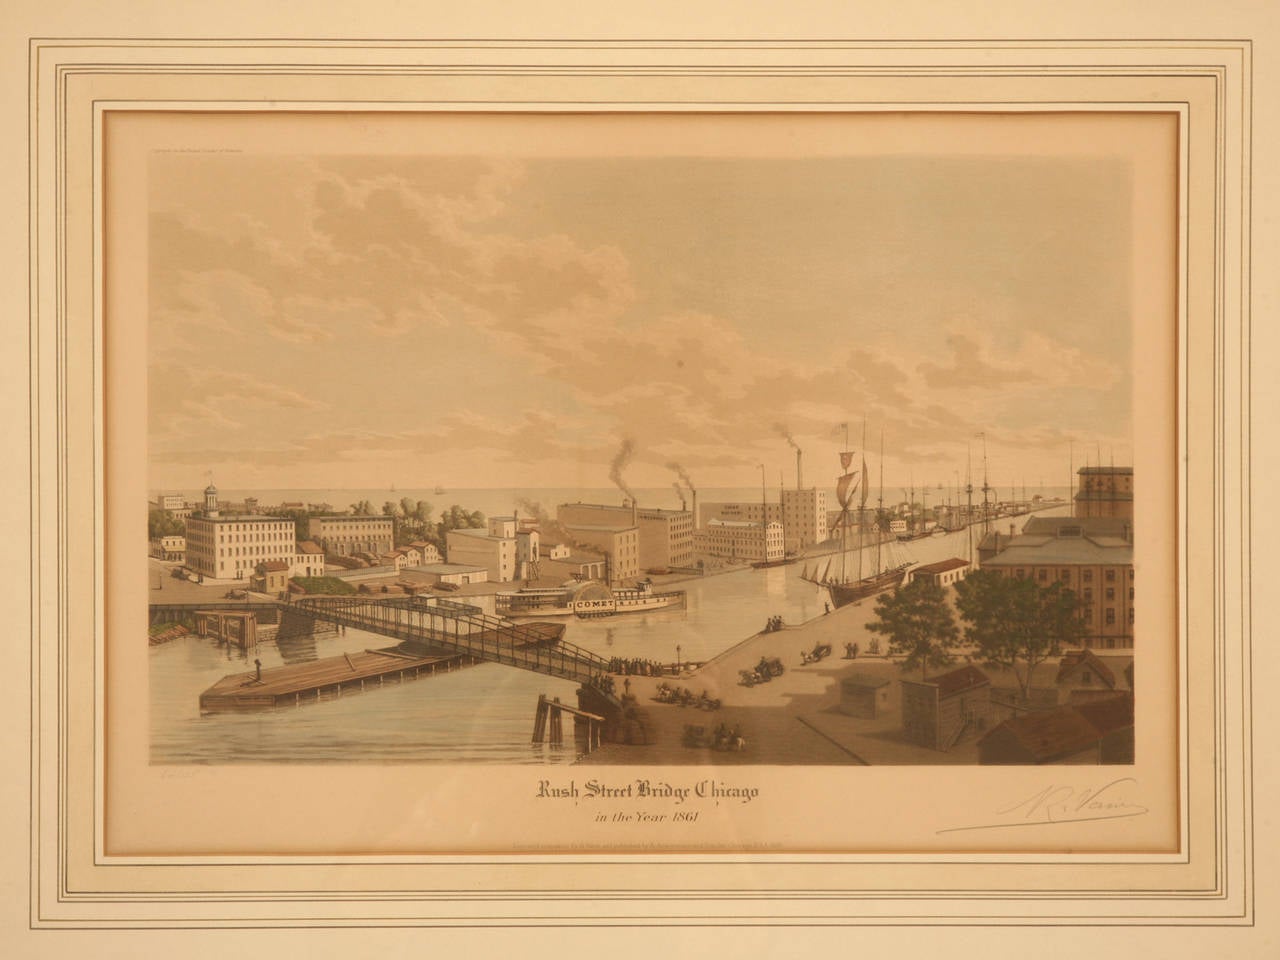 American Raoul Varin Signed Aquatint of Chicago Rush Street Bridge, 1861